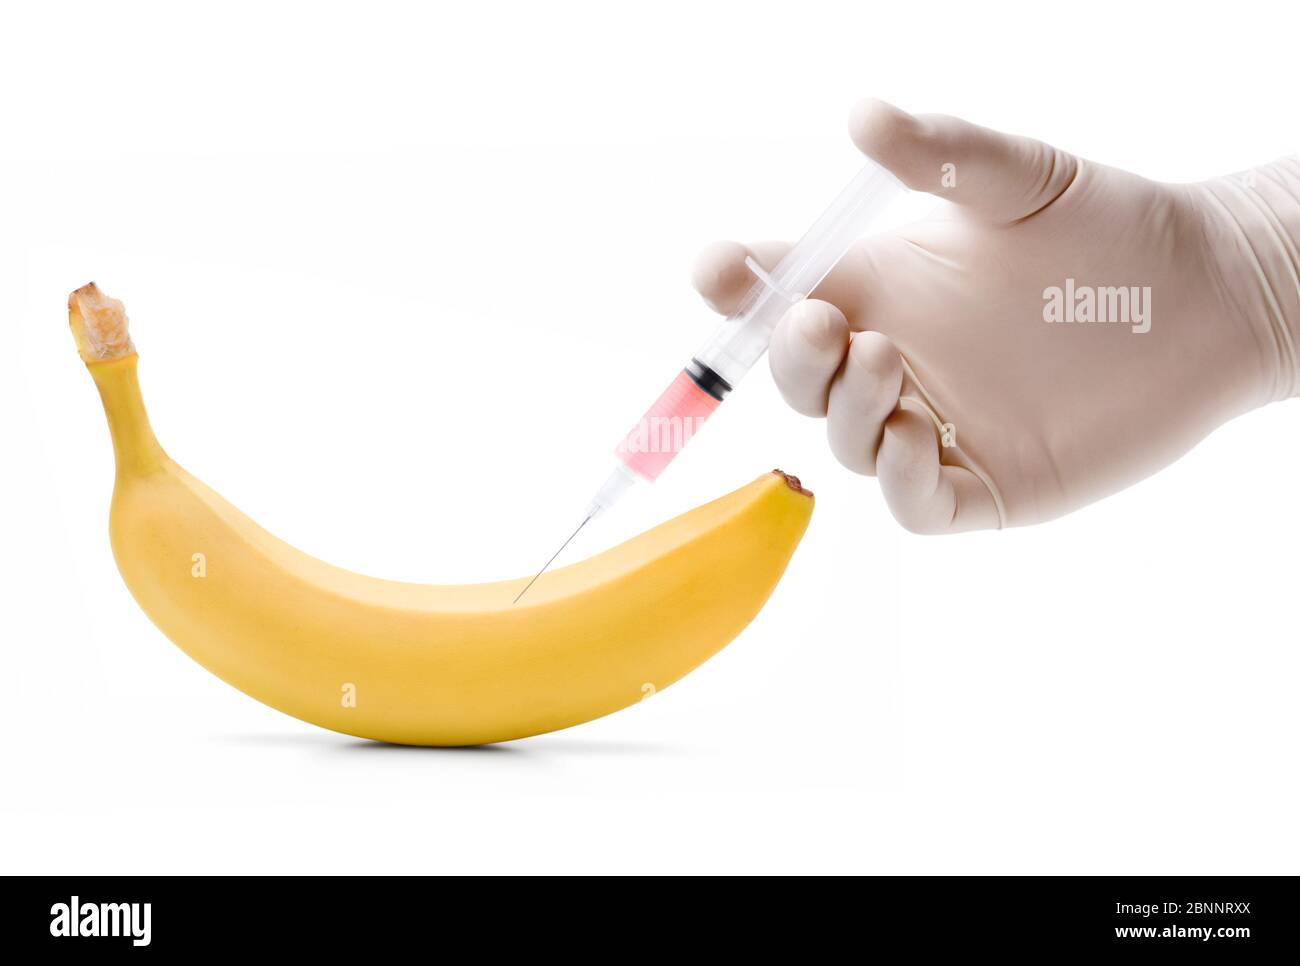 Injecting a liquid into a banana Stock Photo